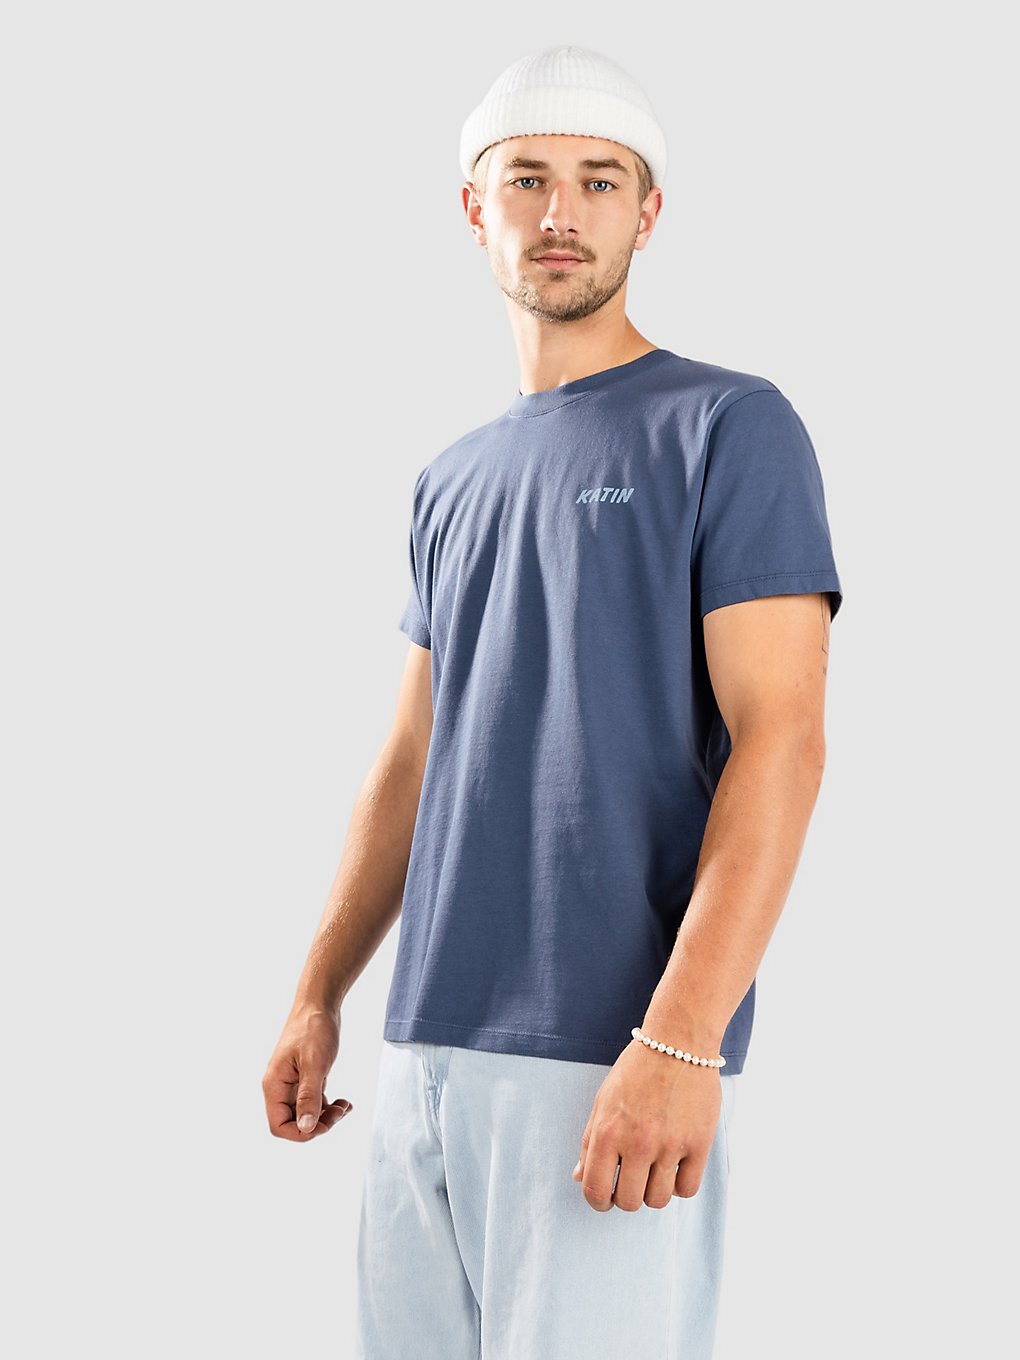 Katin USA Swift T-Shirt washed blue kaufen